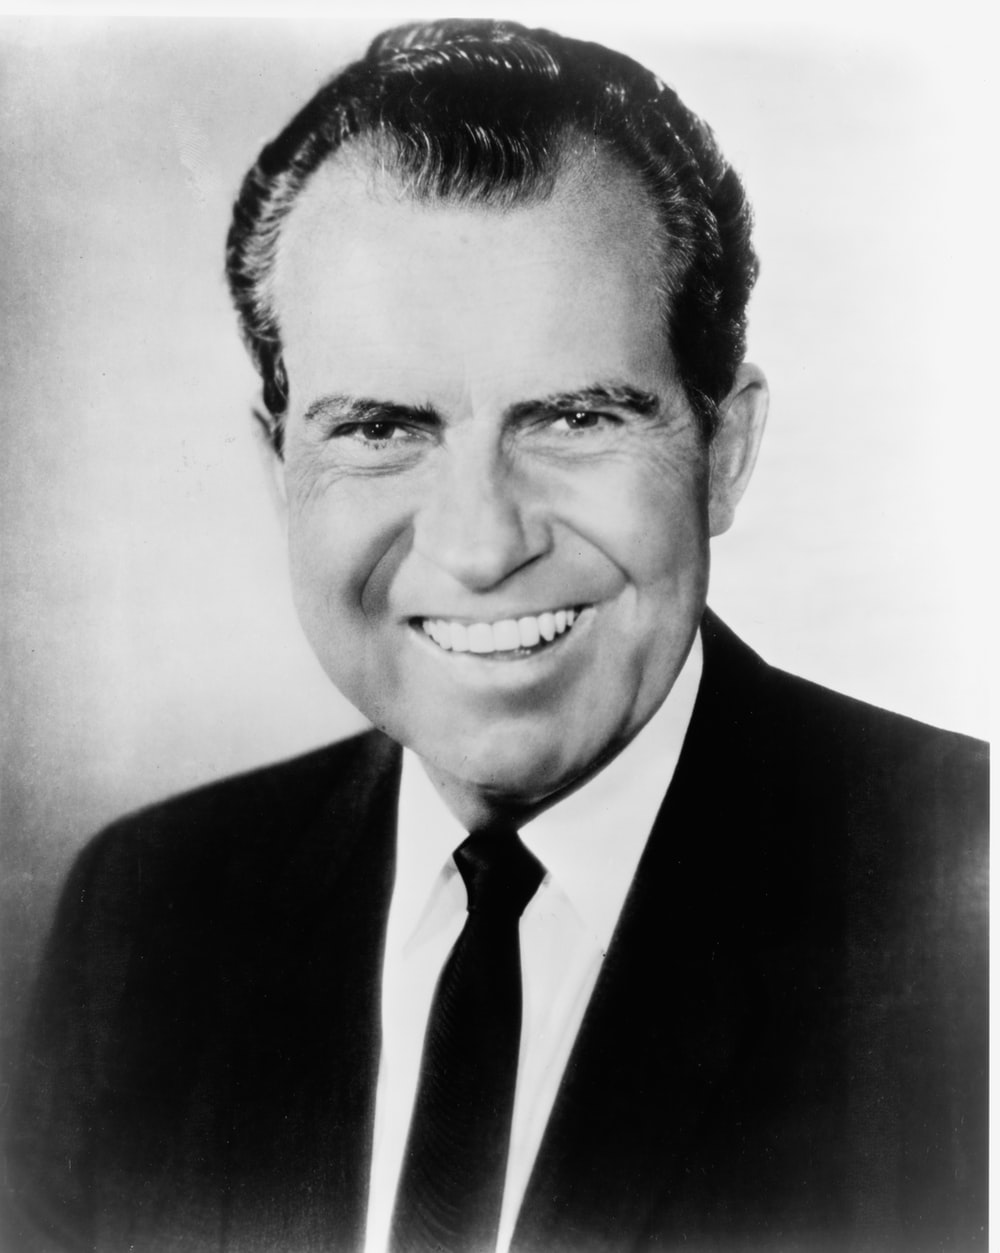 Nixon Picture. Download Free Image